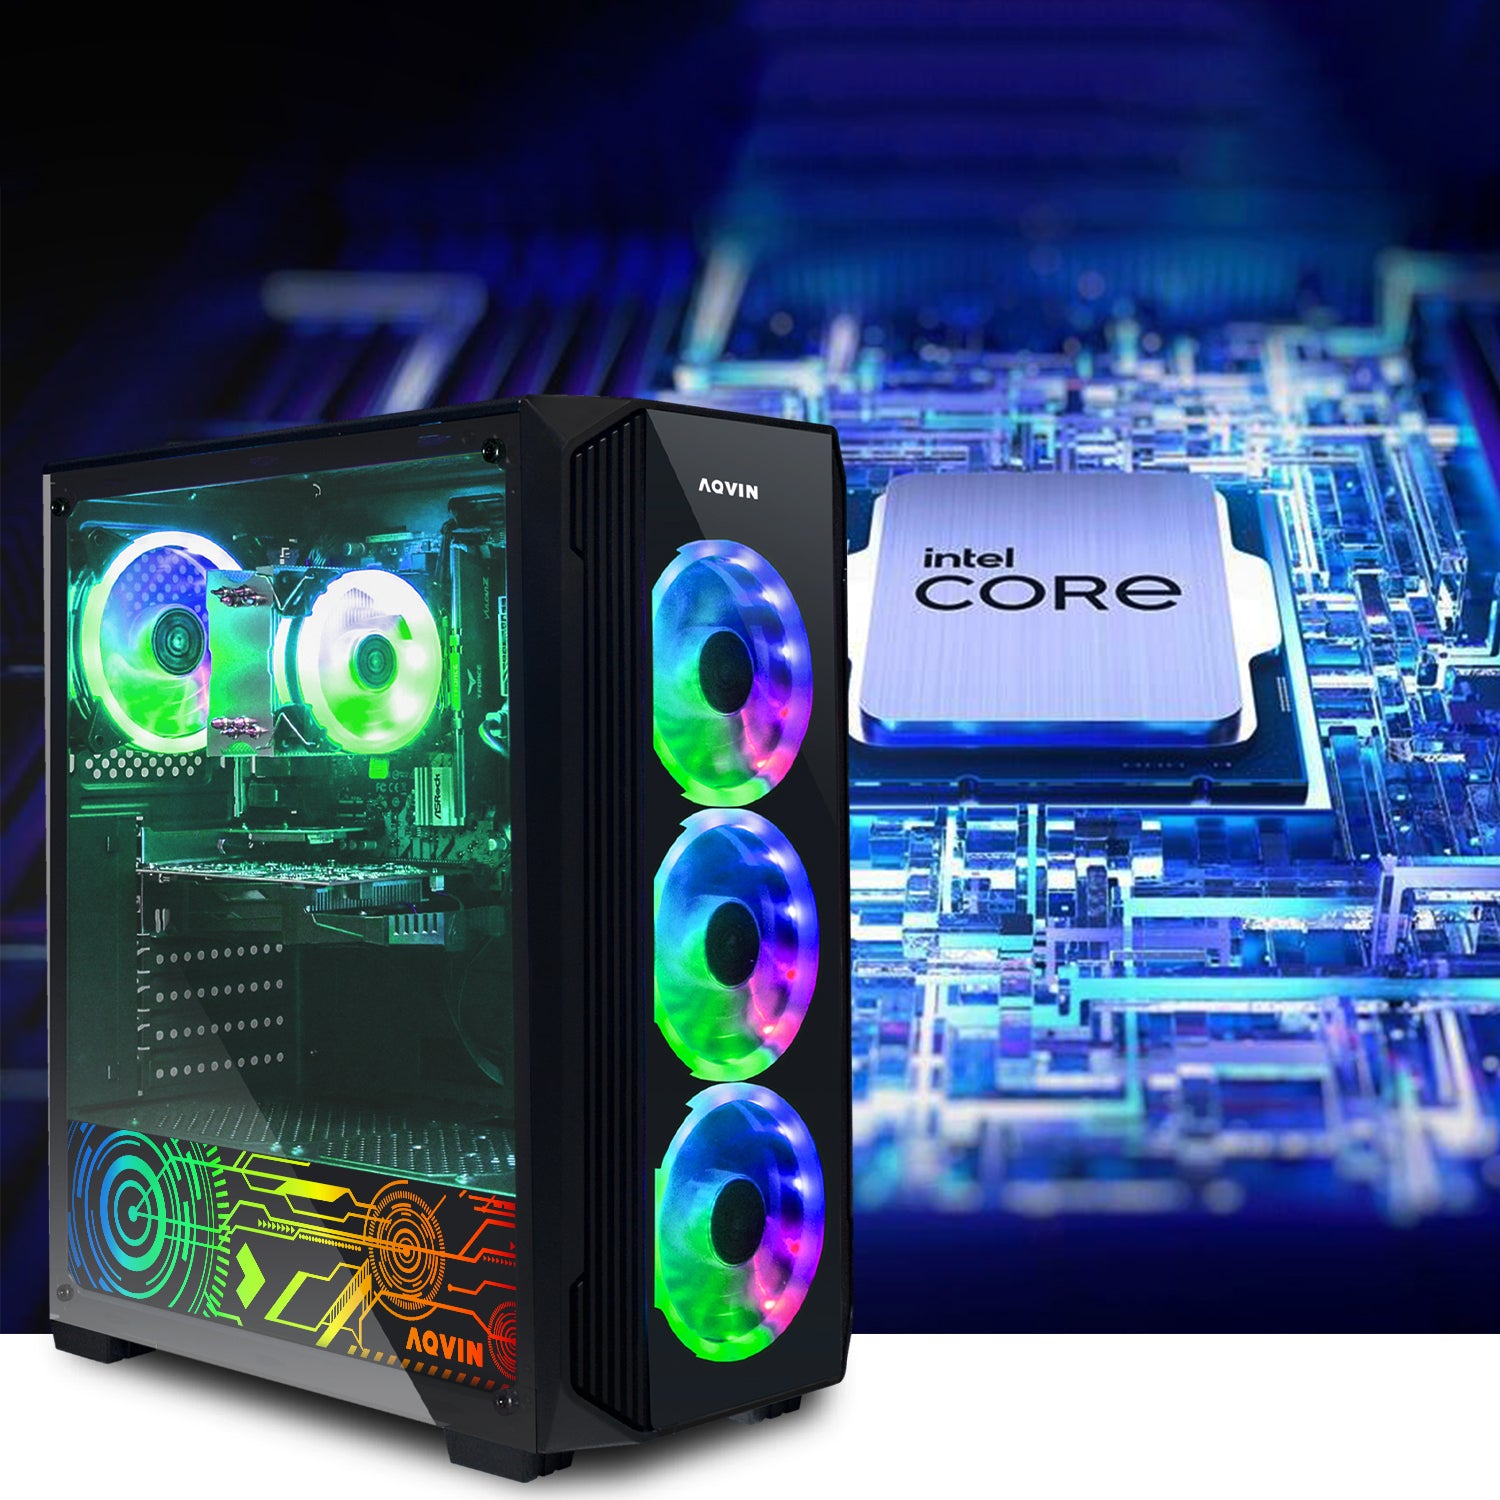 AQVIN Z-Force Gaming Desktop Tower PC/ Intel Core i7 up to 4.00 GHz Processor/ RX 580, GTX 1660s, RTX 3050, 3060, 4060/ 32GB DDR4 RAM/ 512GB - 2TB SSD/ WIFI/ Windows 10 Pro - Refurbished